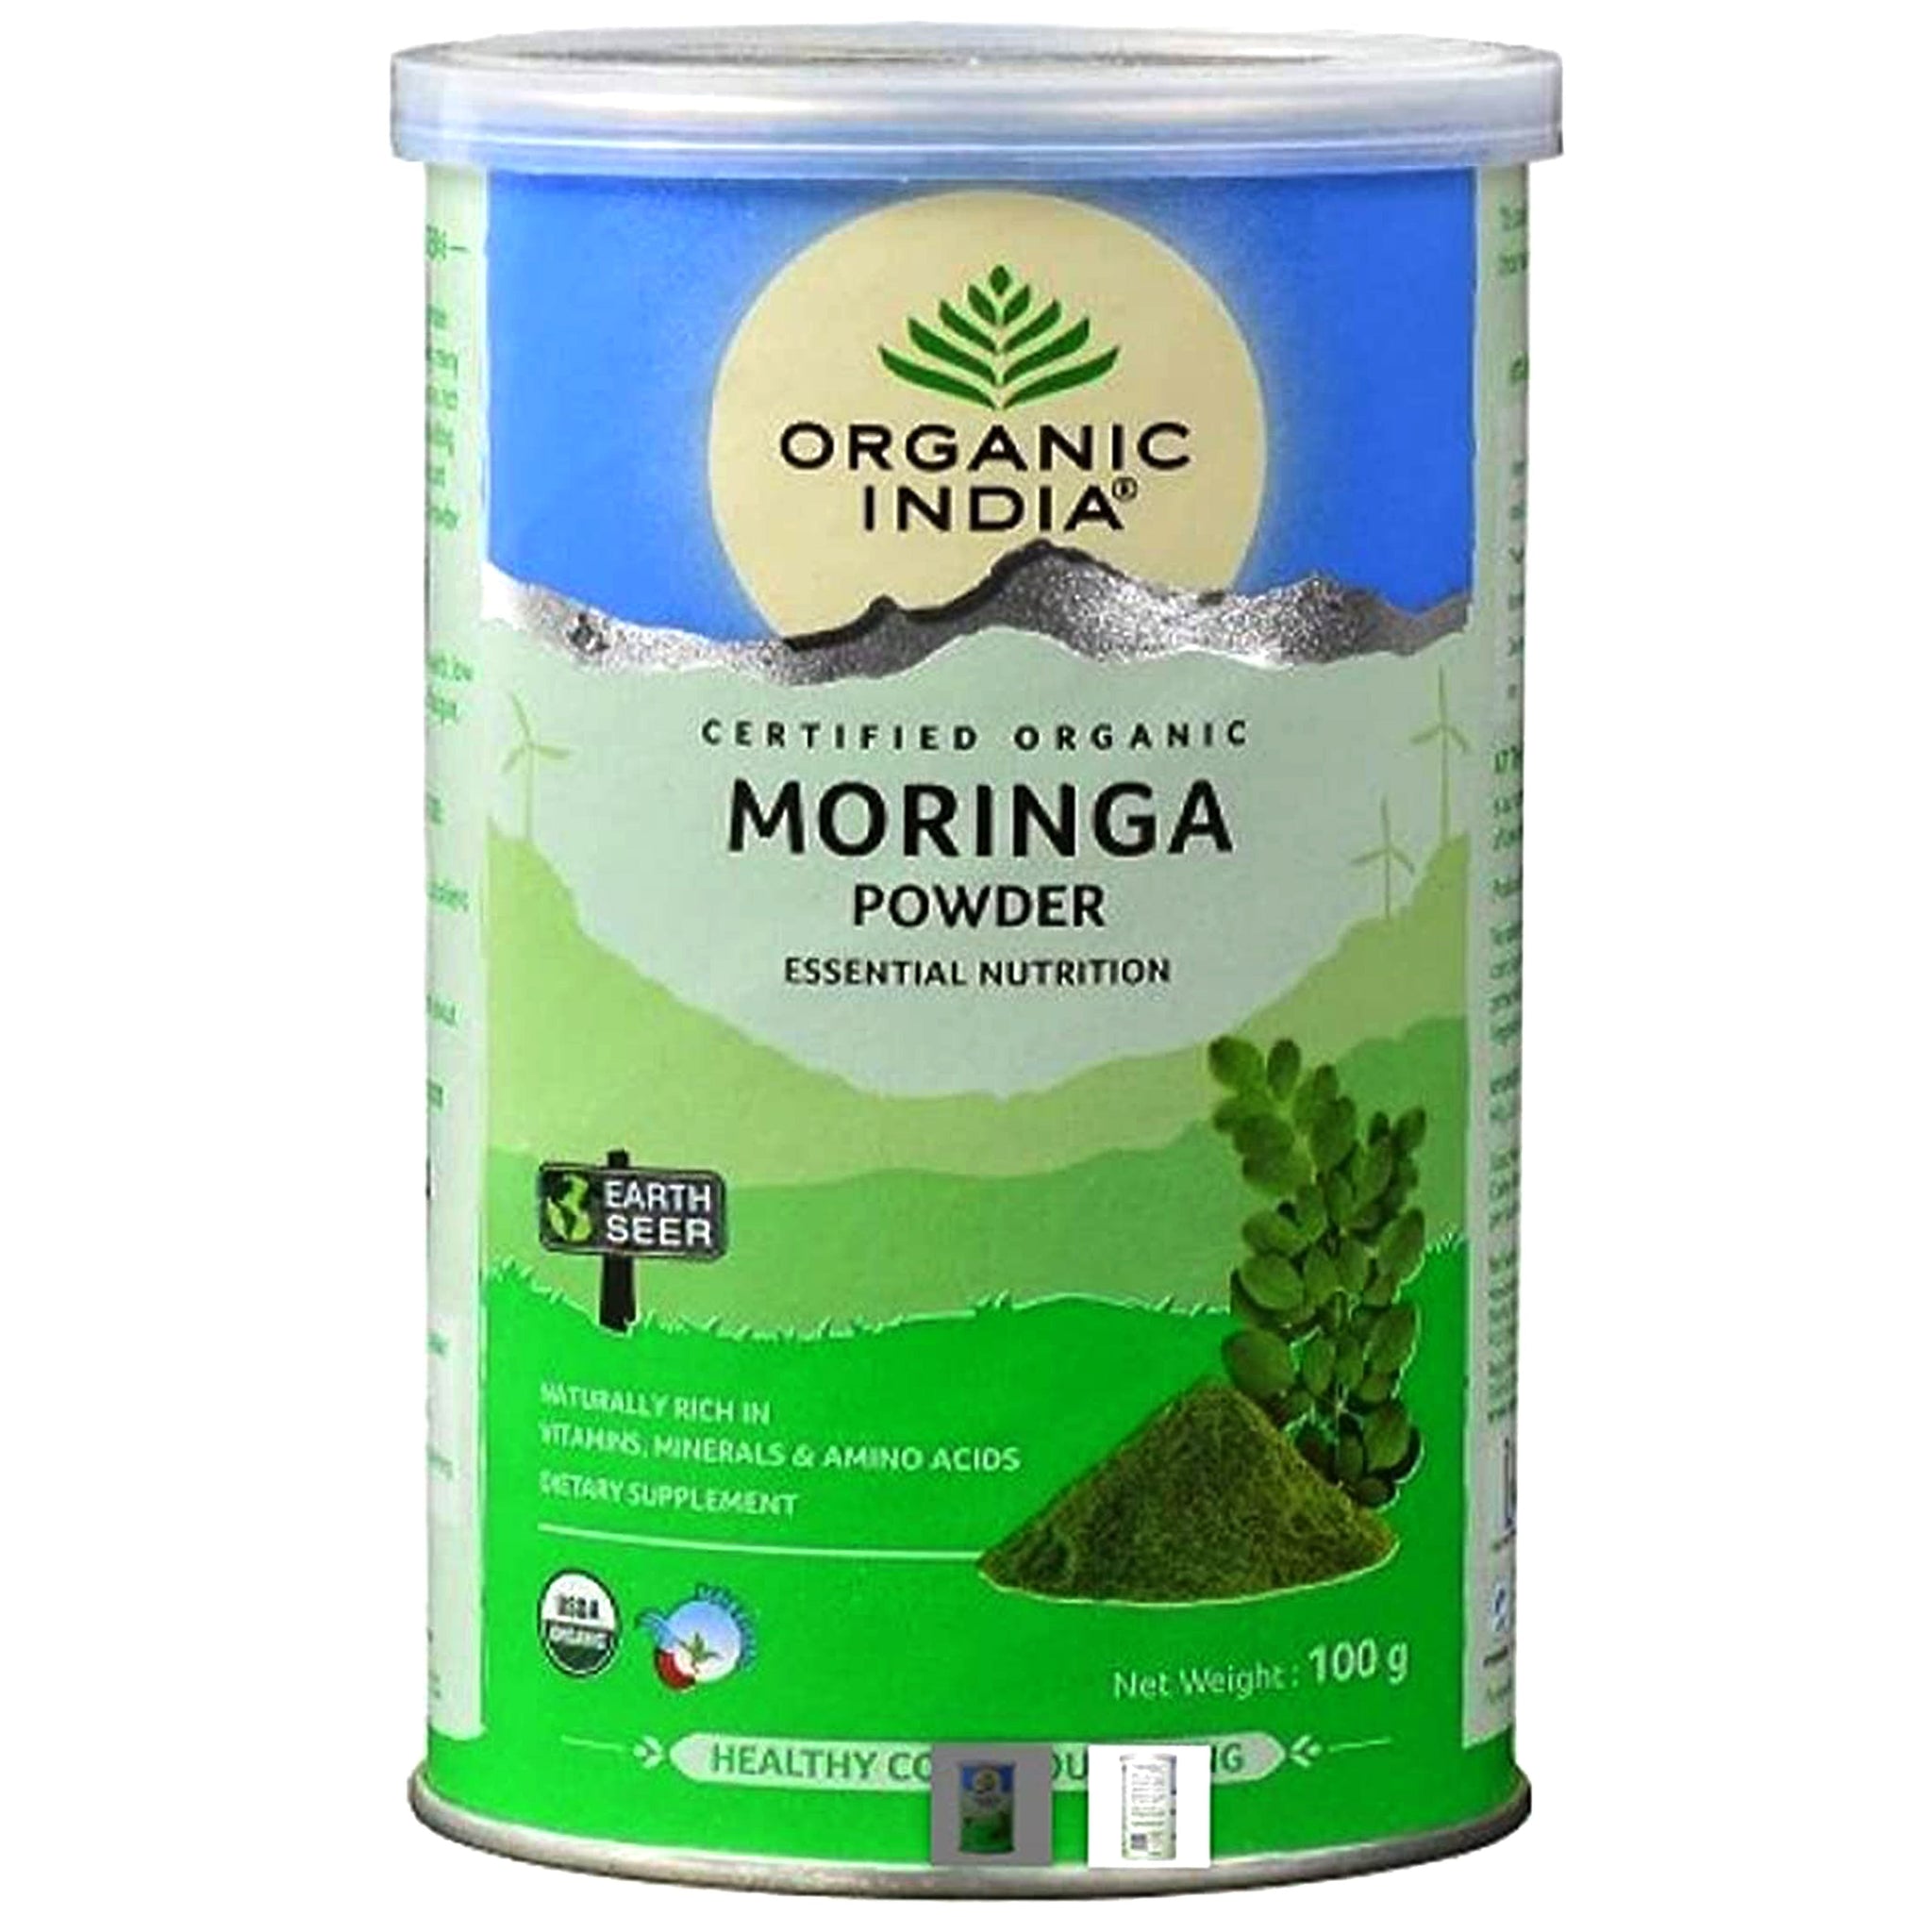 Organic India Moringa Powder 100g Value Pack of 2 